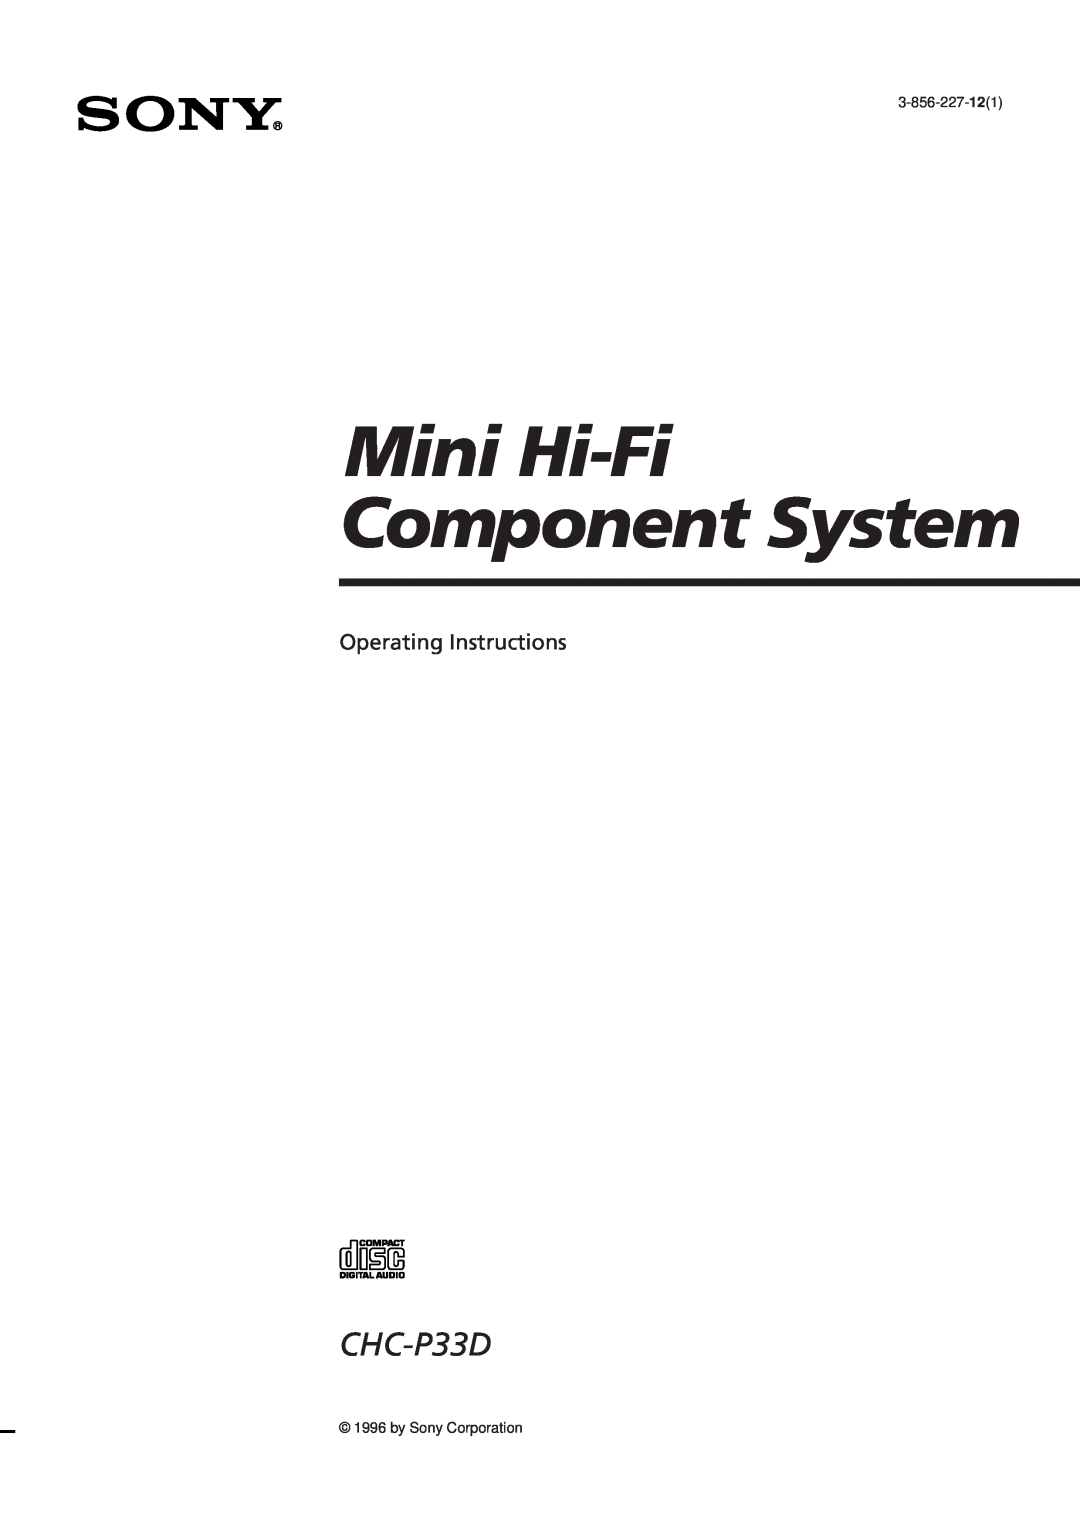 Sony CHC-P33D operating instructions Mini Hi-FiComponent System, Operating Instructions, 3-856-227-121 